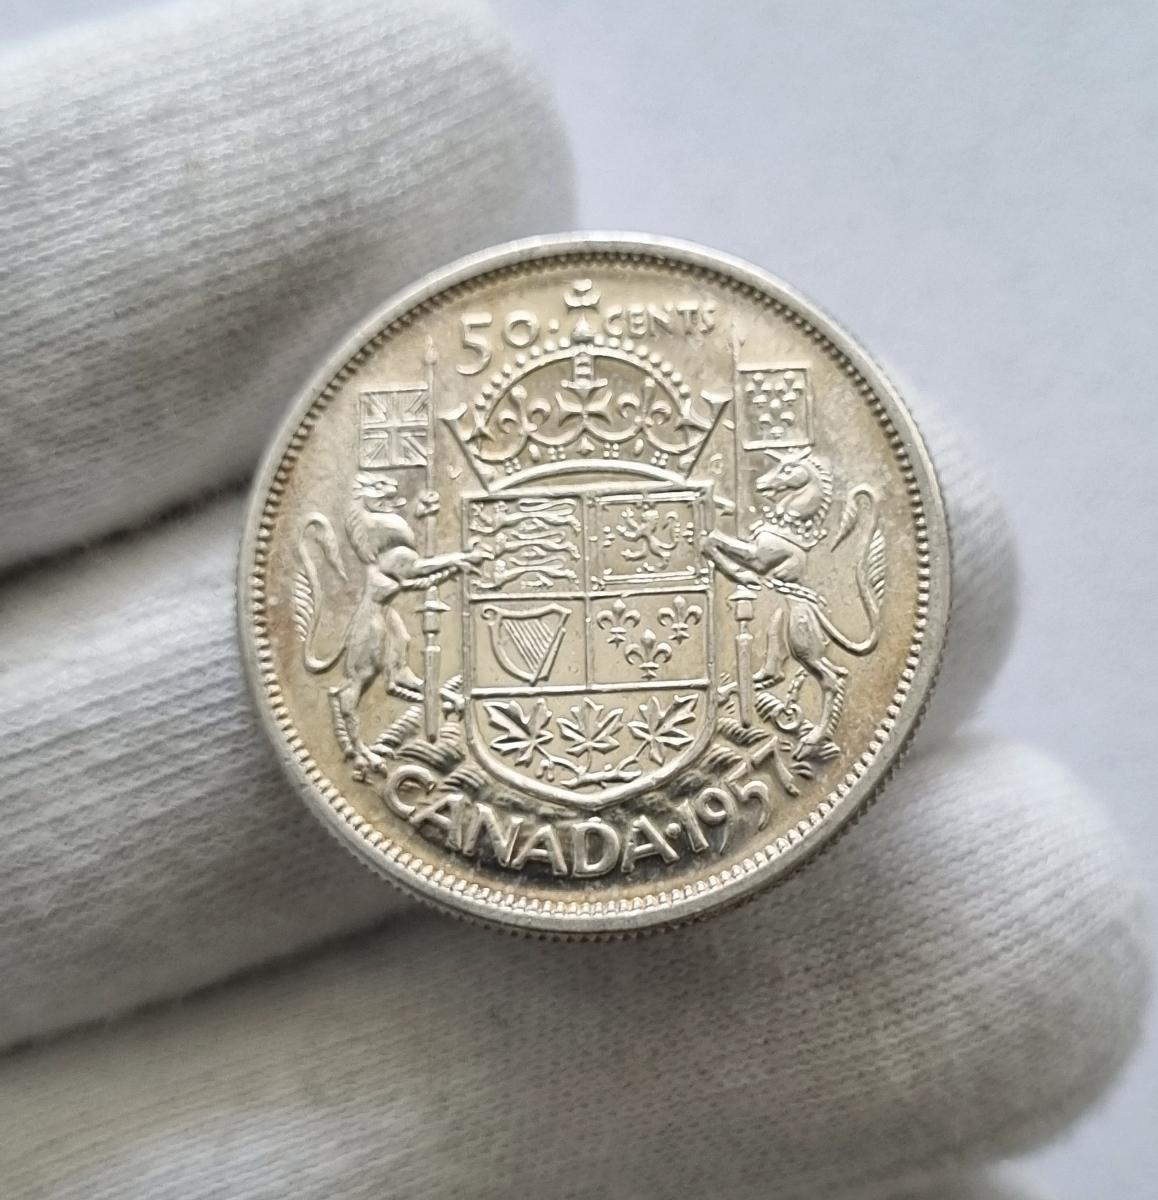 Strieborný 50 cent - Alžbeta II. - Numizmatika